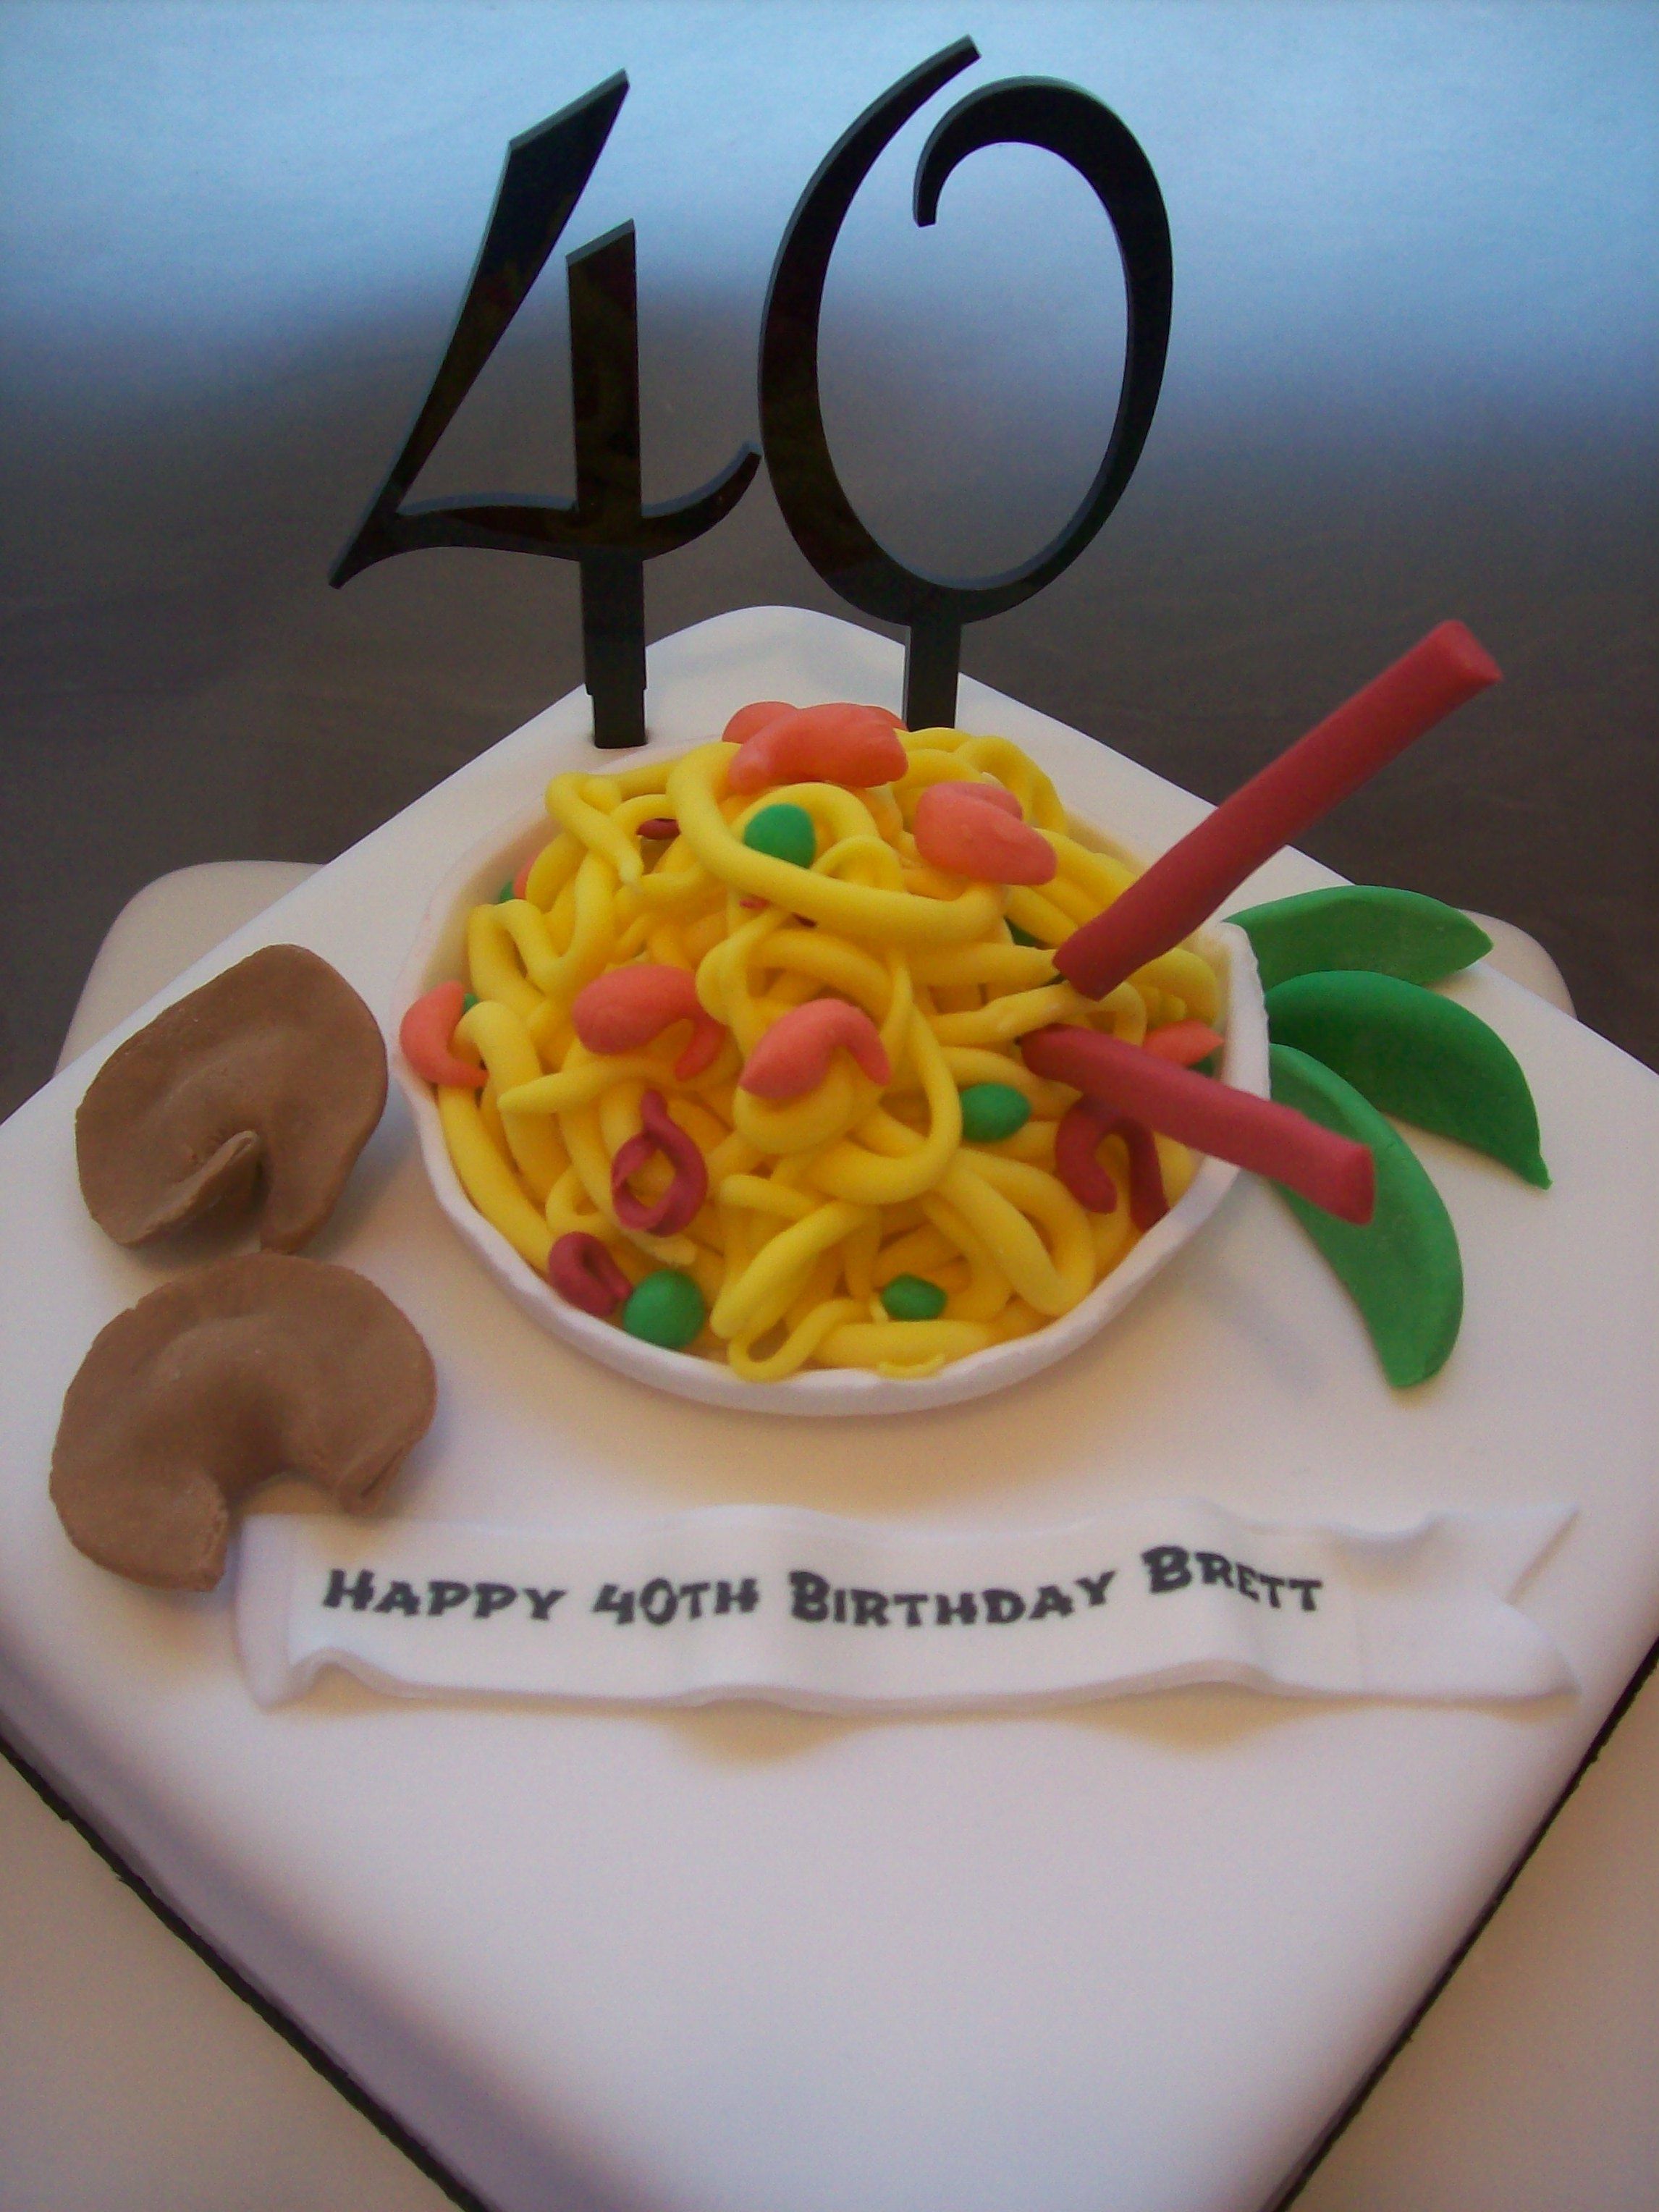 Adult birthday novelty cakes asia